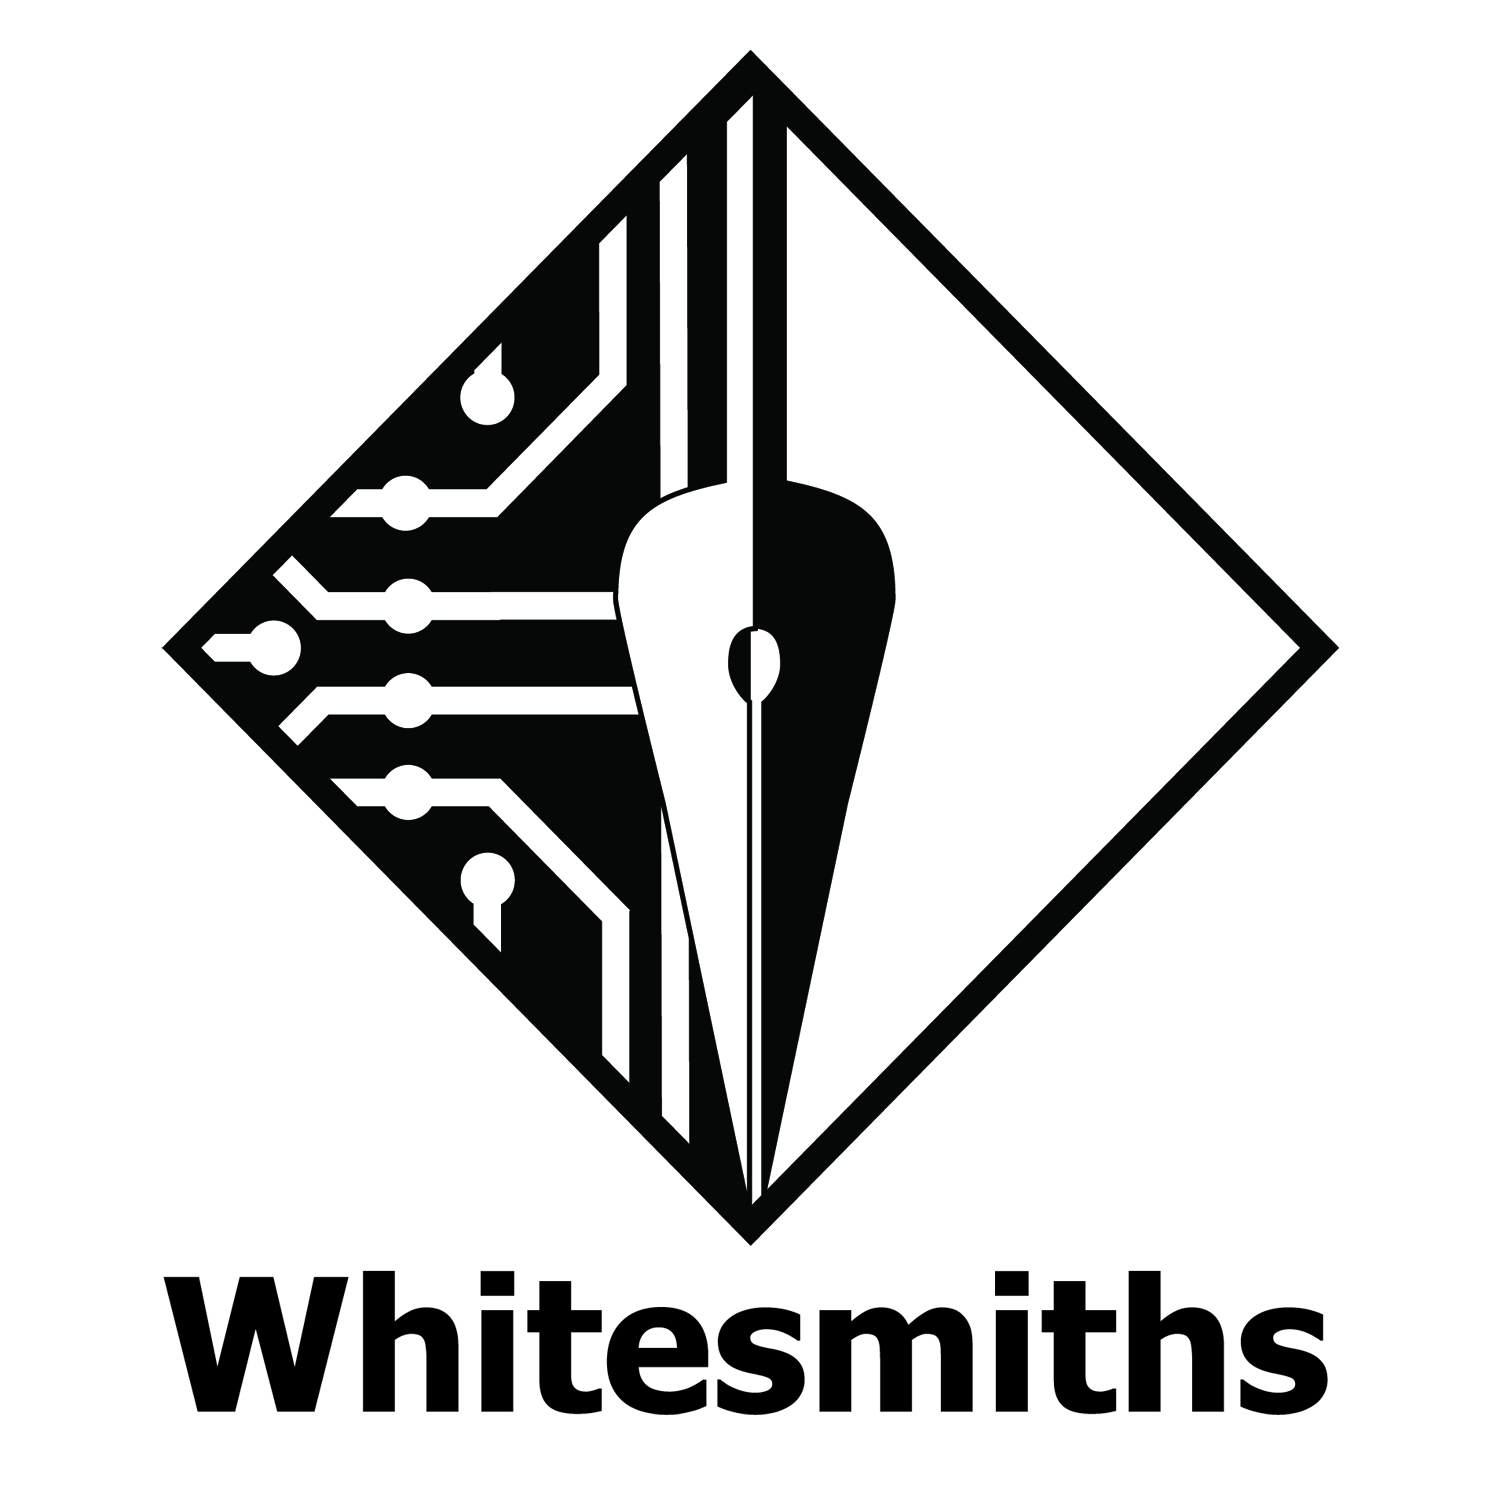 Whitesmiths Logo.jpg